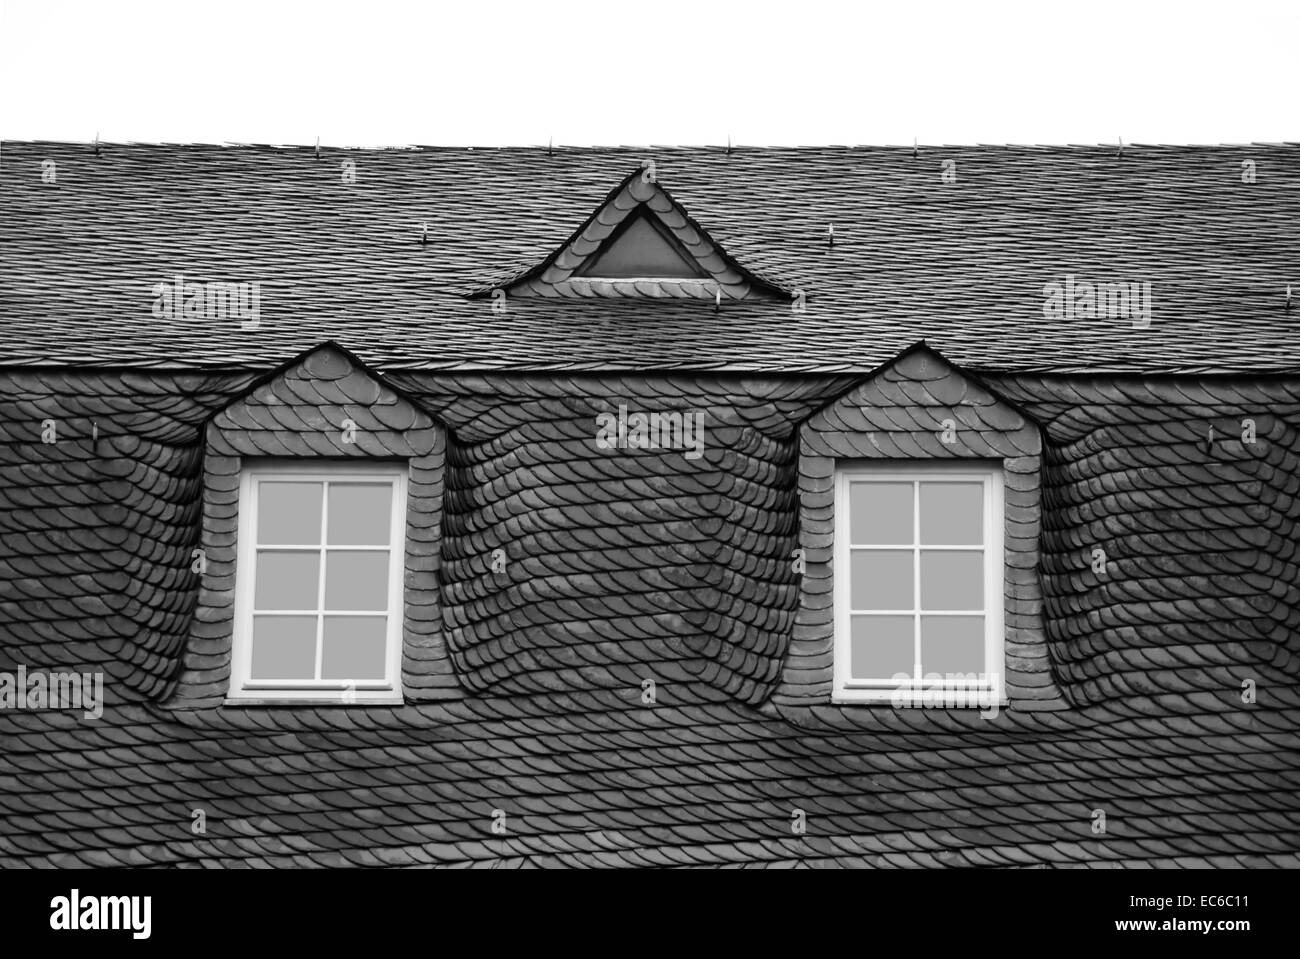 Roof shingles Stock Photo